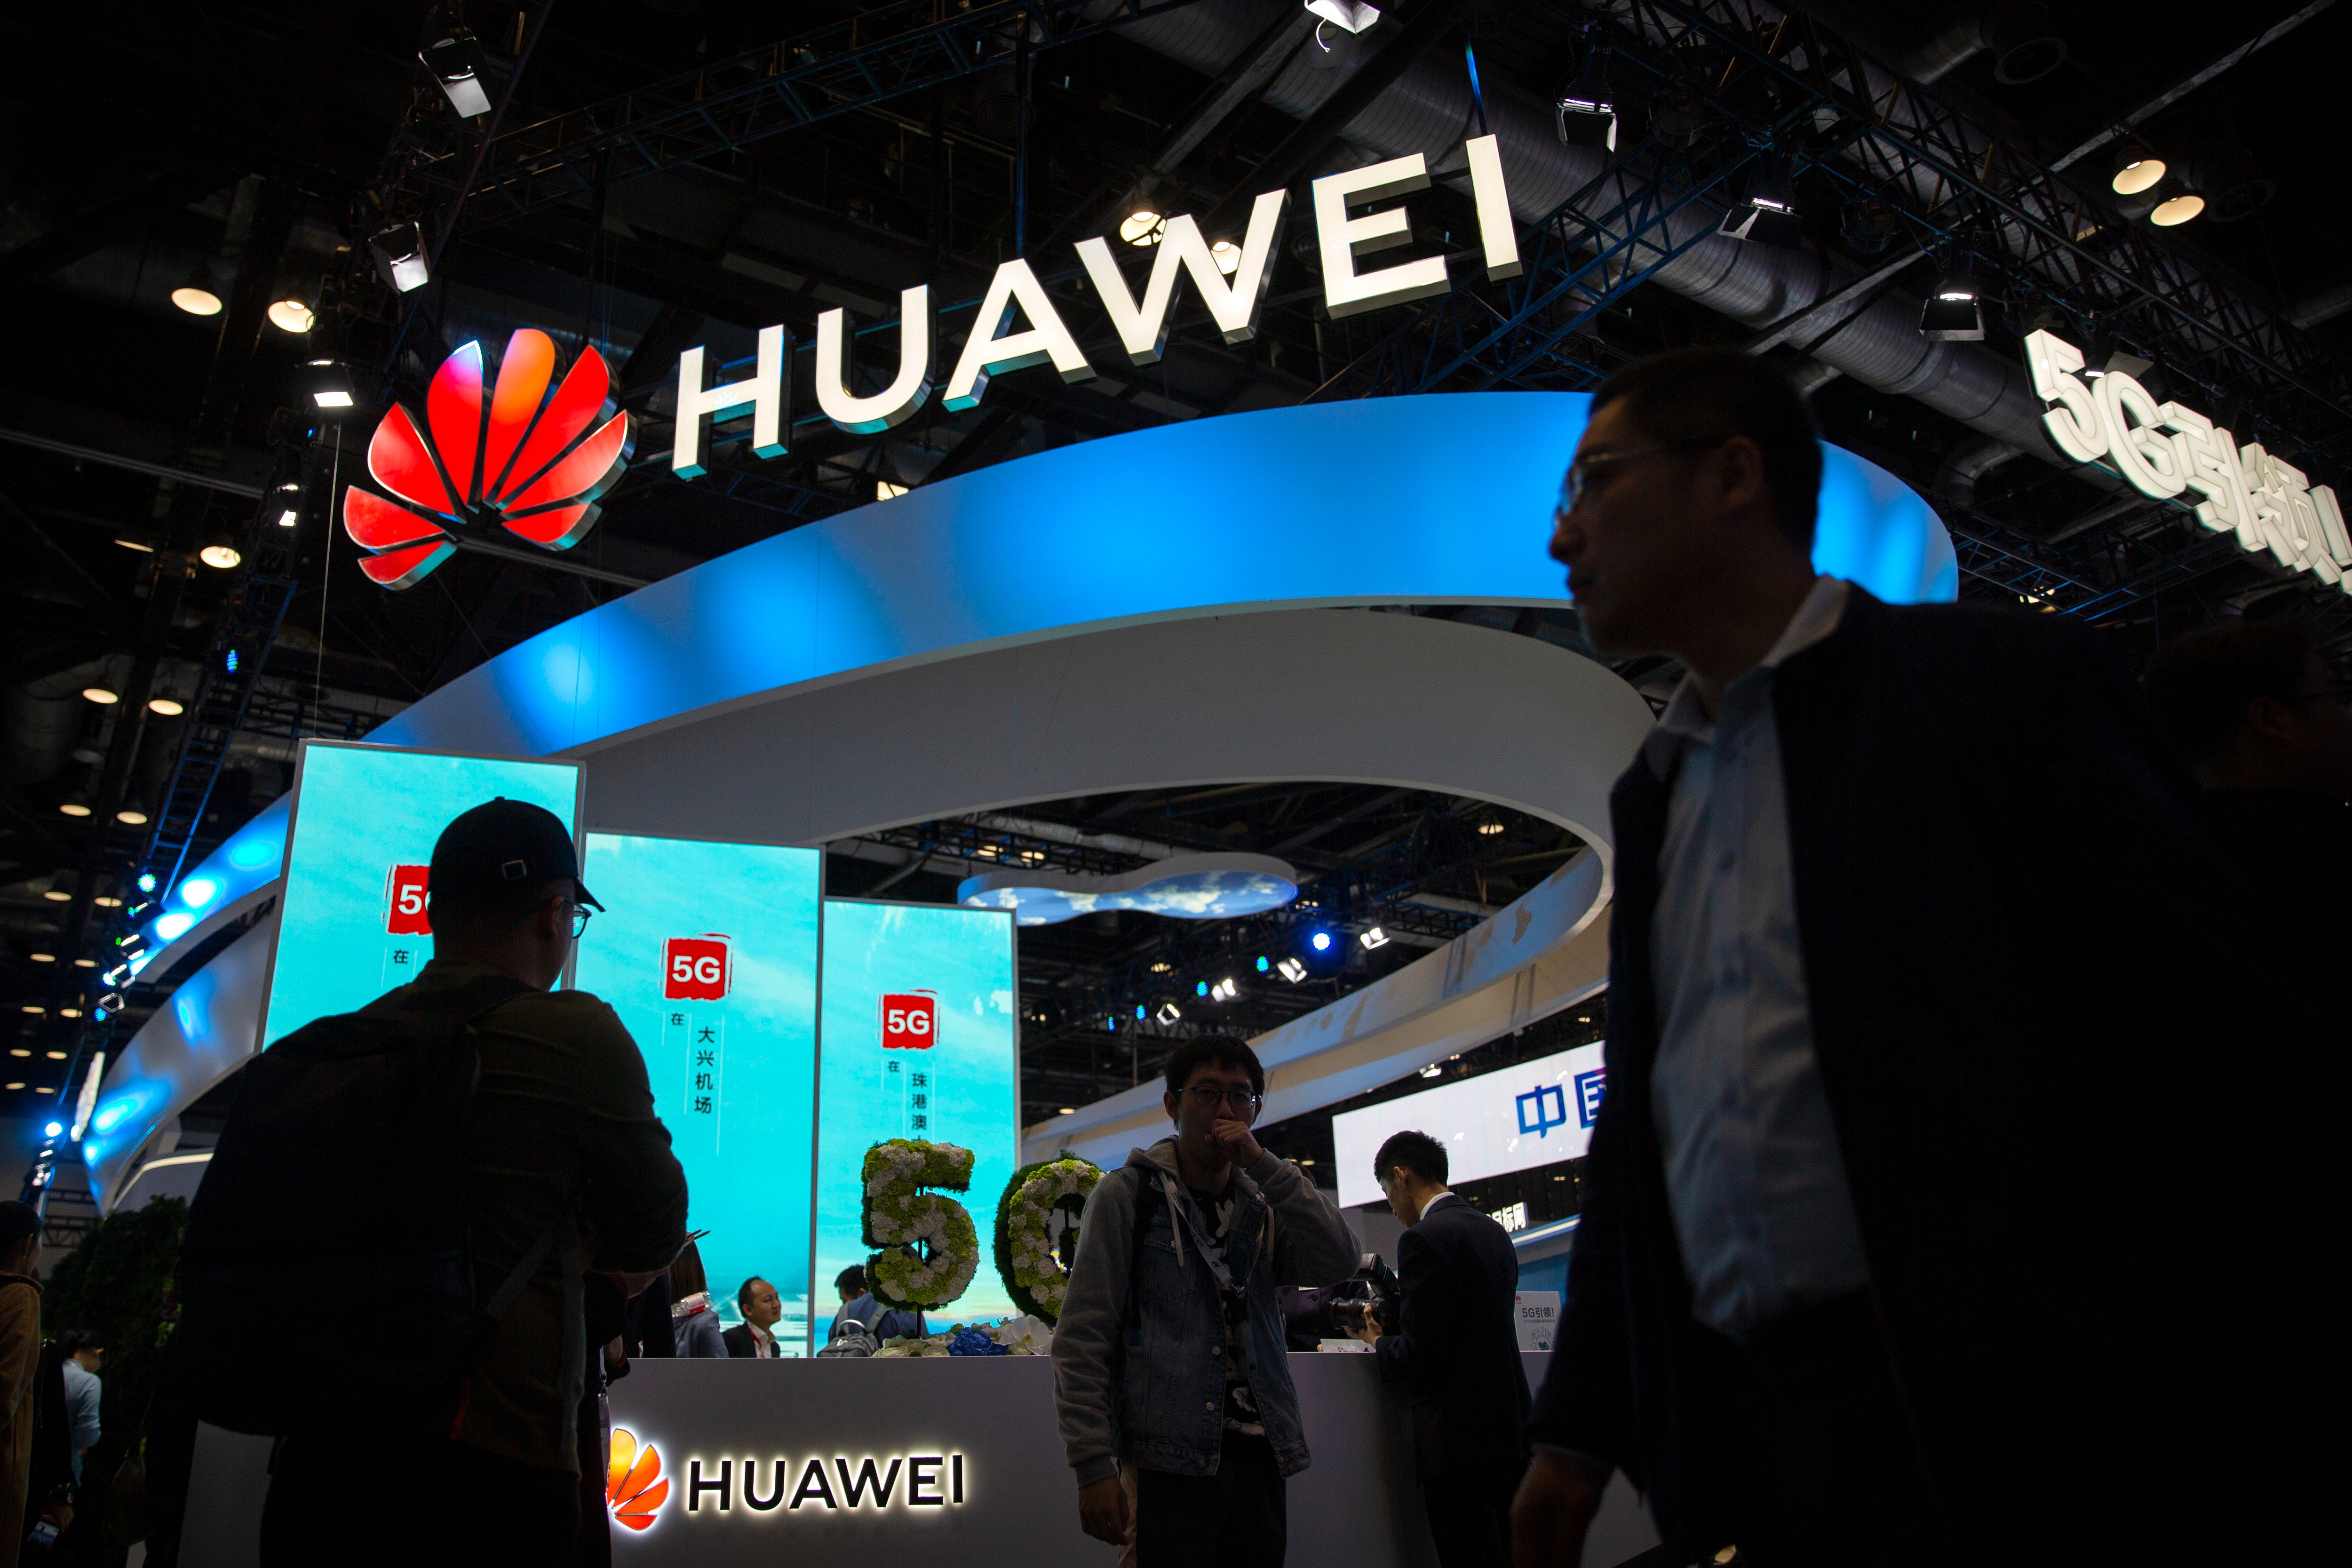 Taiwan China Huawei Investigation